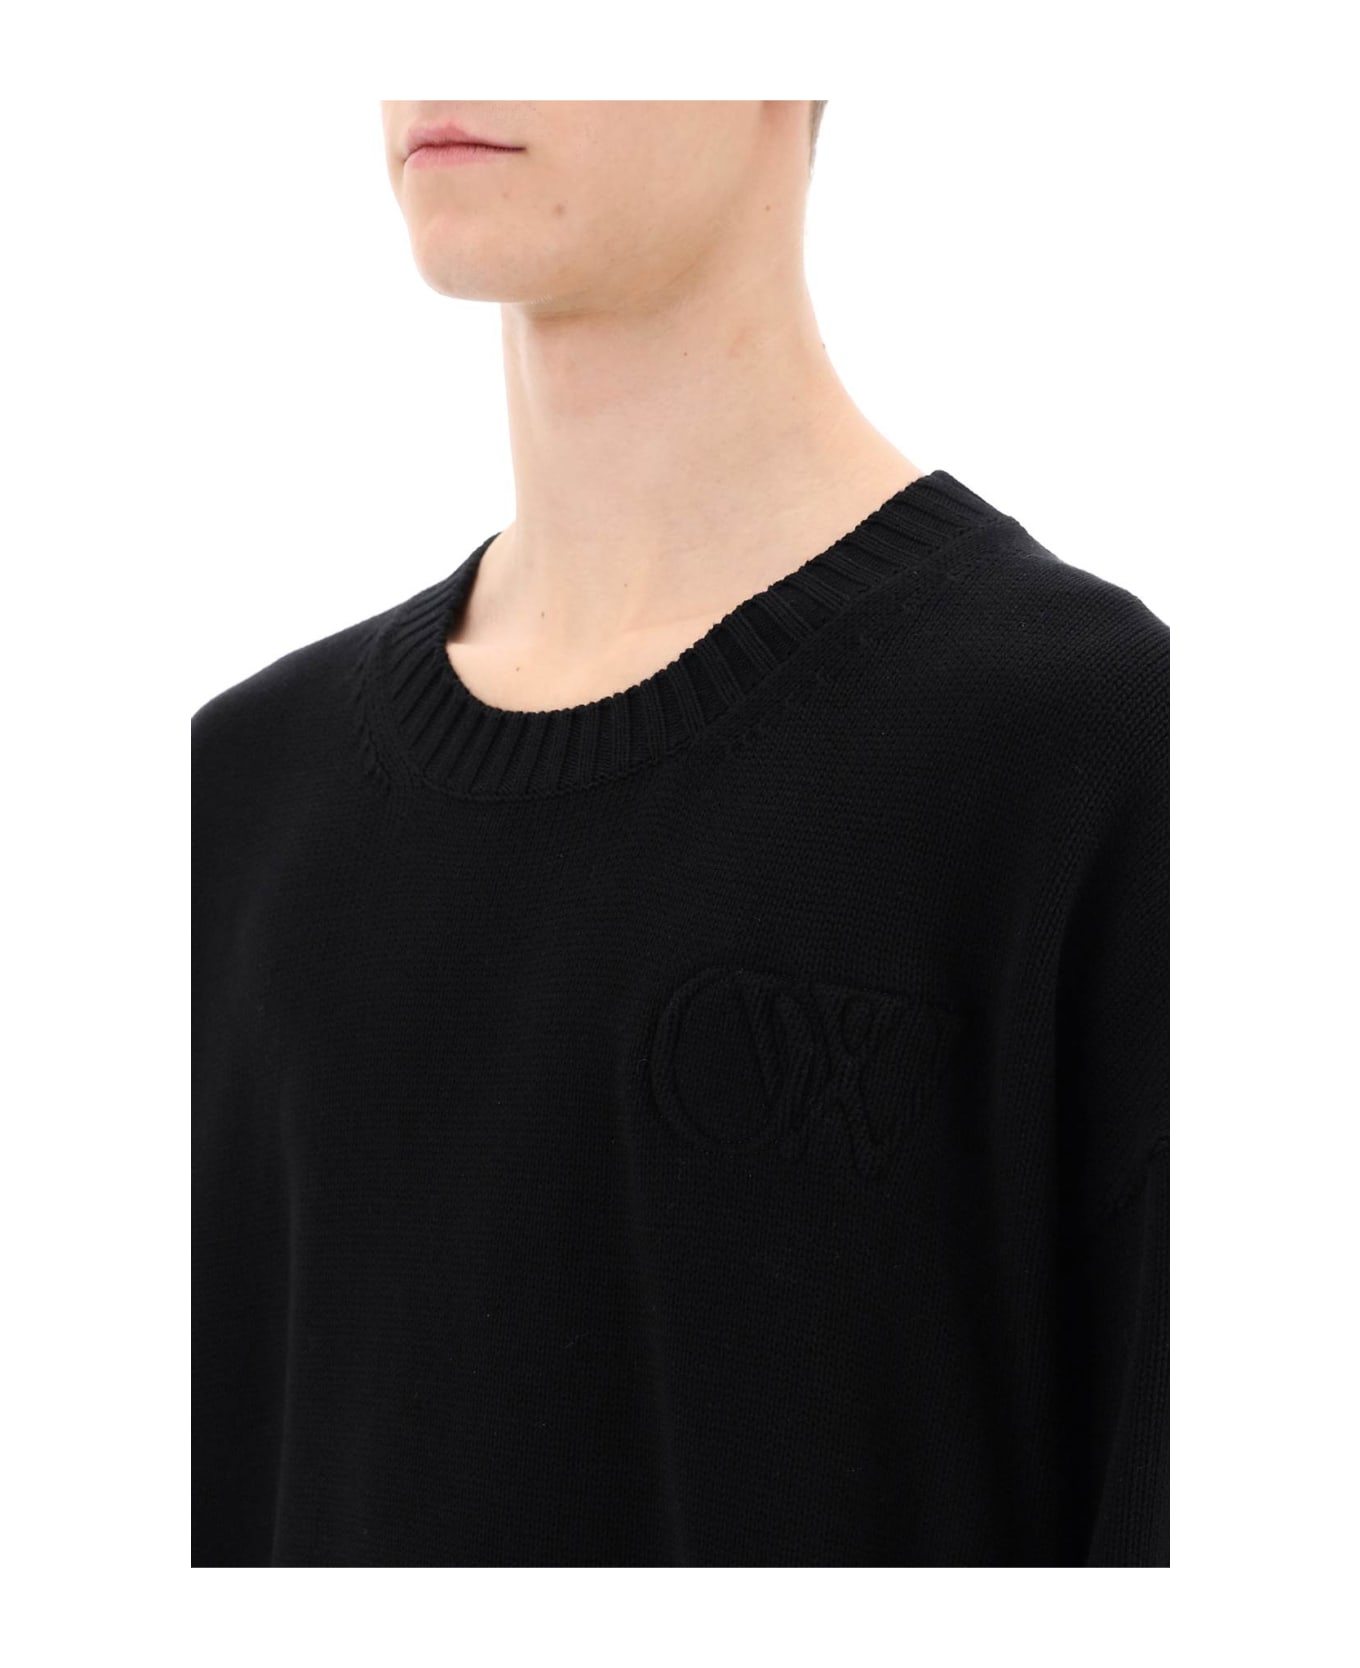 Off-White Sweater With Embossed Diagonal Motif - Black Black